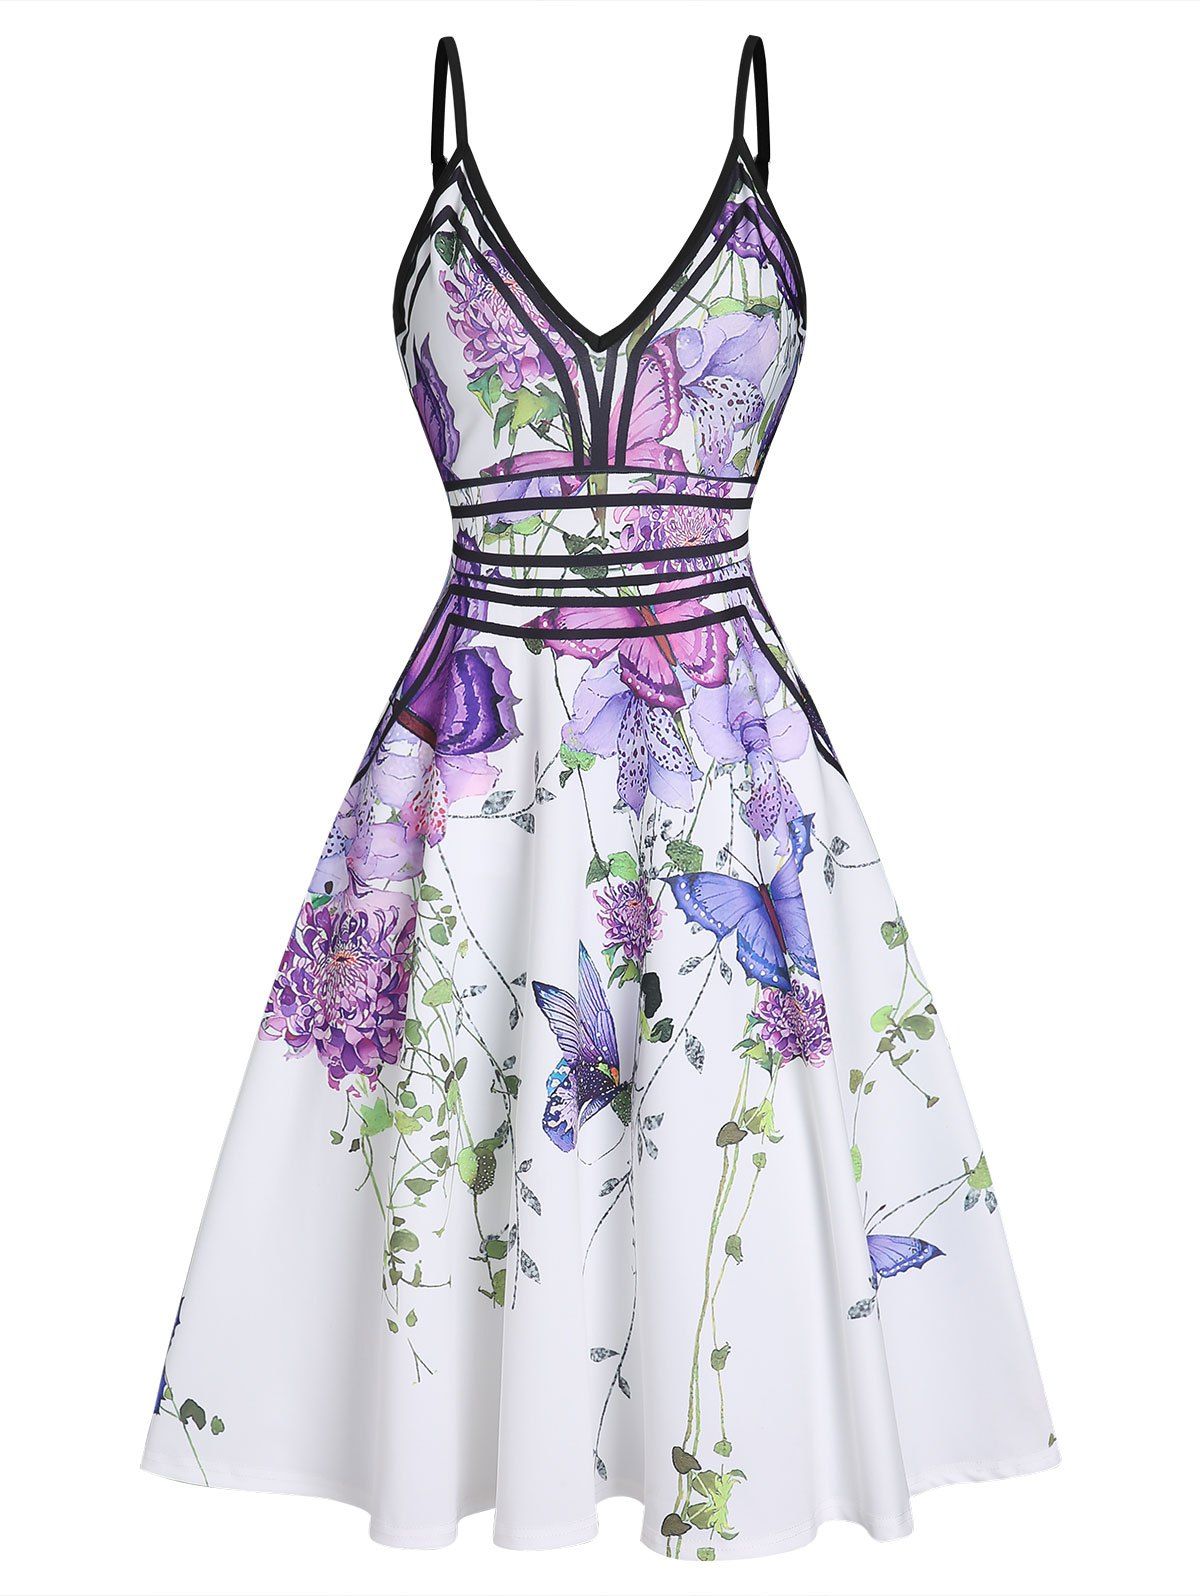 Vacation A Line Sundress Butterfly Flower Print Garden Party Dress Plunge Contrast Piping Summer Dress - LIGHT PURPLE L